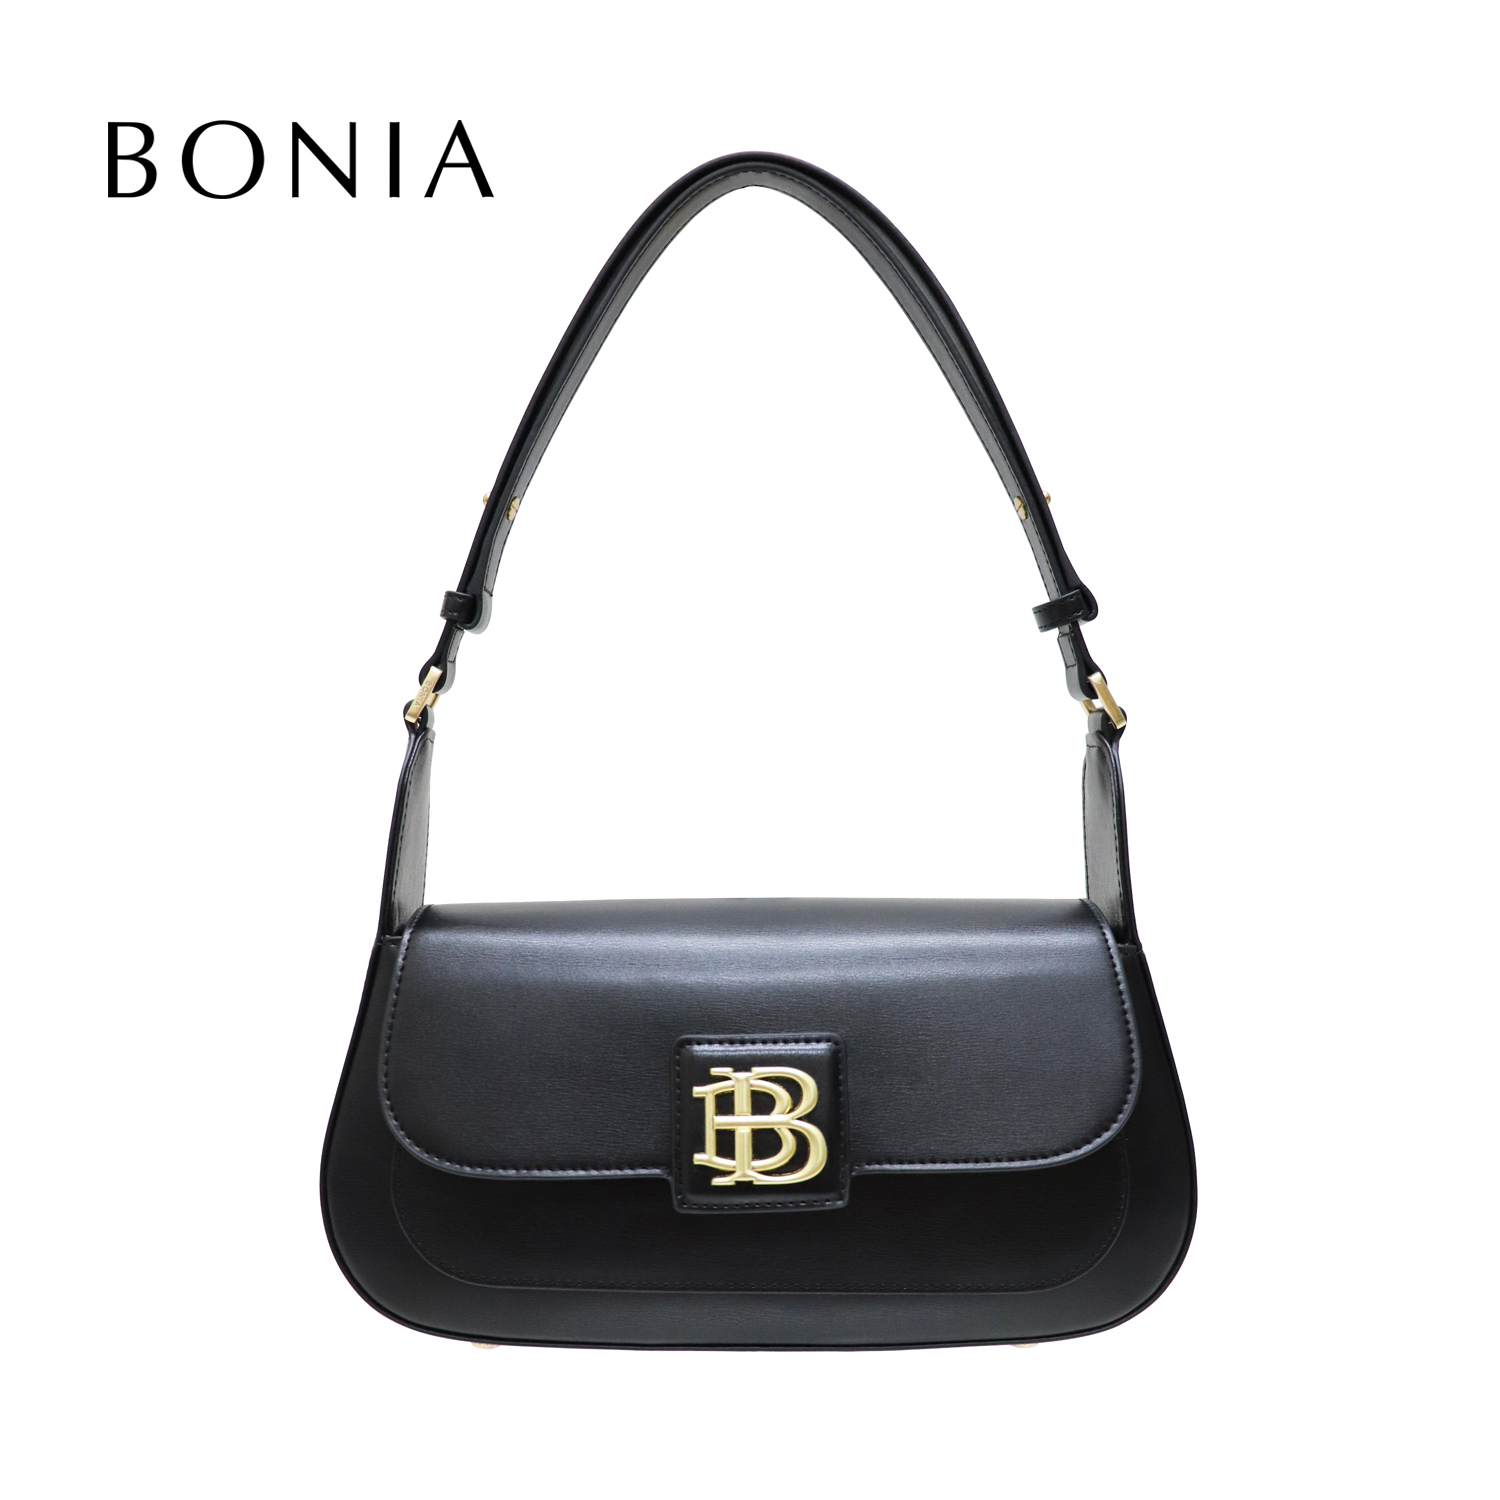 Bonia Sling bag 2 Code Space 643 Size 26x15 cm Price 95 Thousand